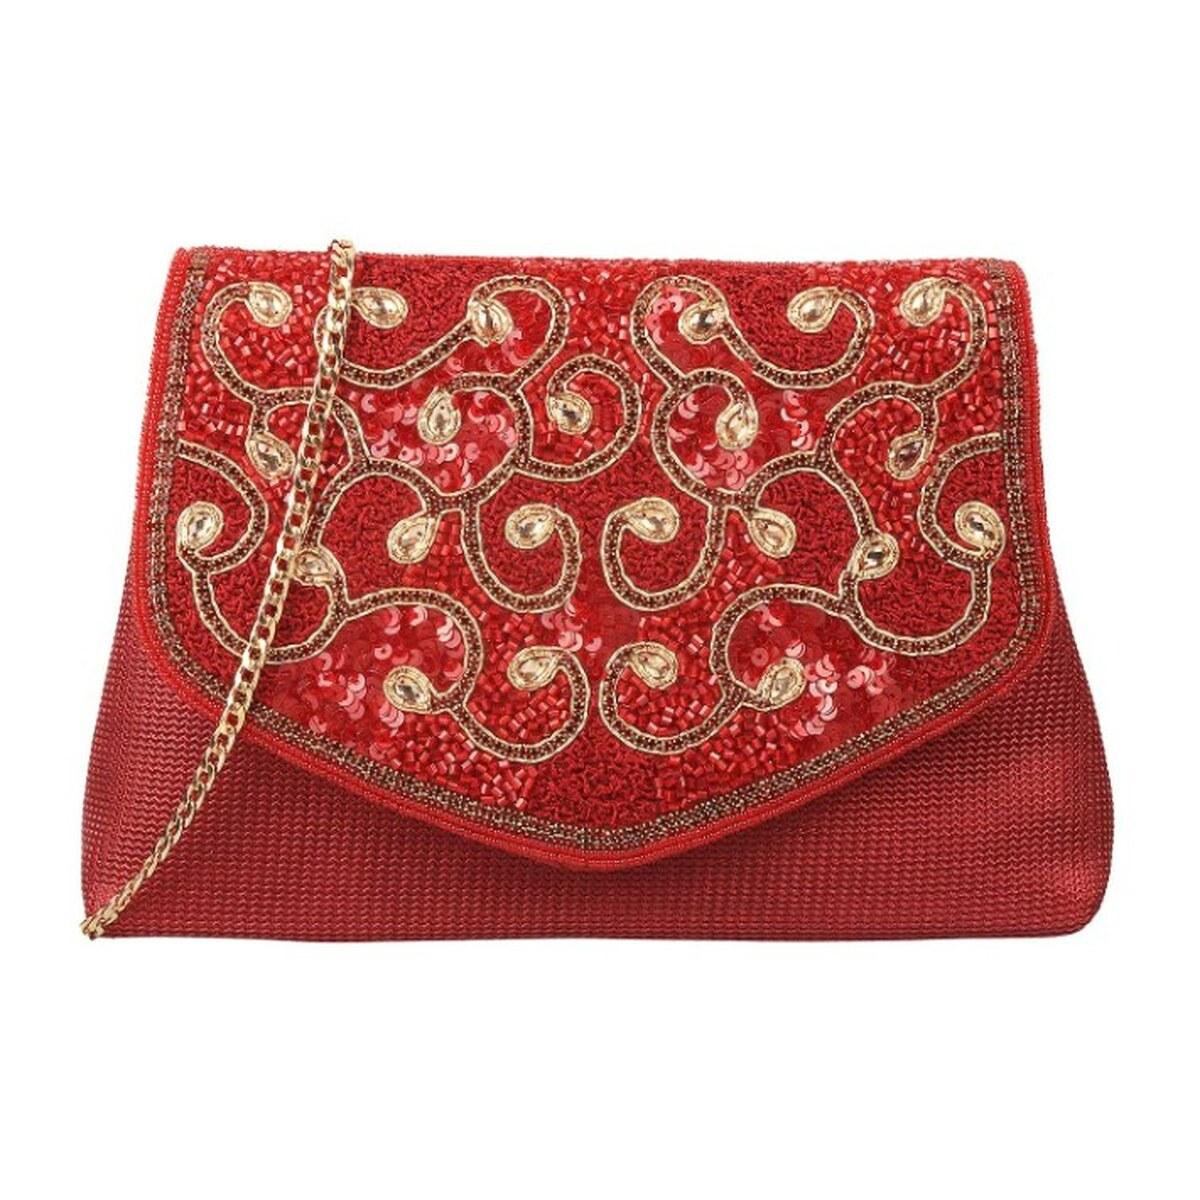 Buy NR BY NIDHI RATHI Women Embellished Suede Purse Clutch Online